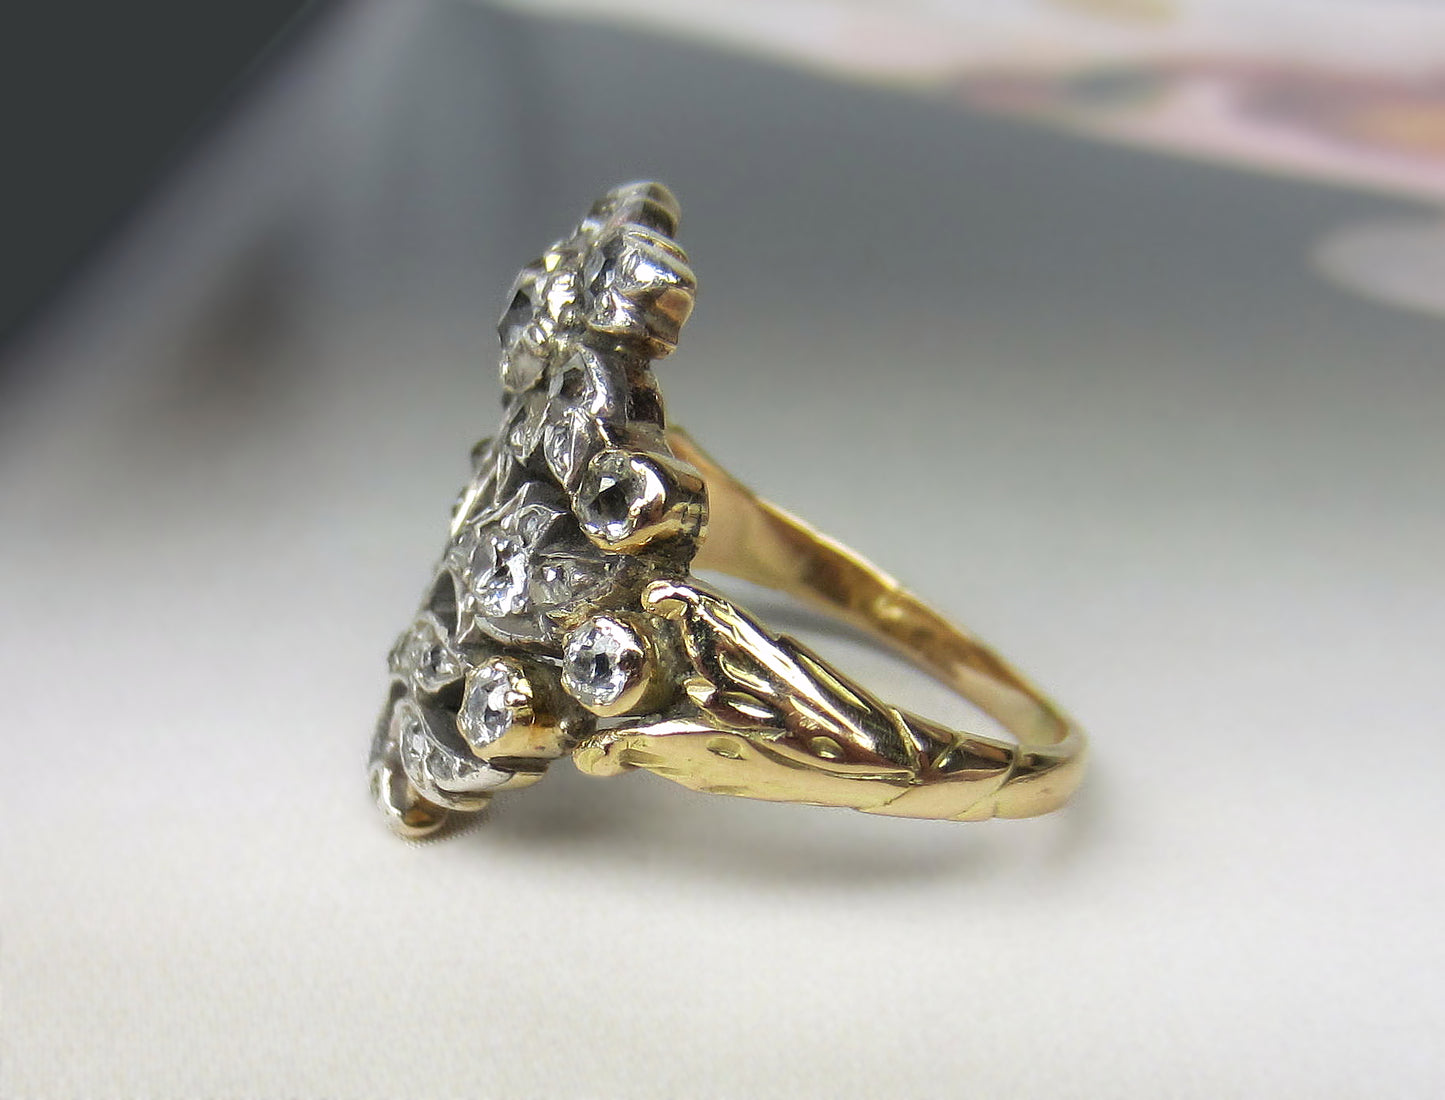 SOLD--Georgian Diamond Giardinetti Ring Silver/15k c. 1800